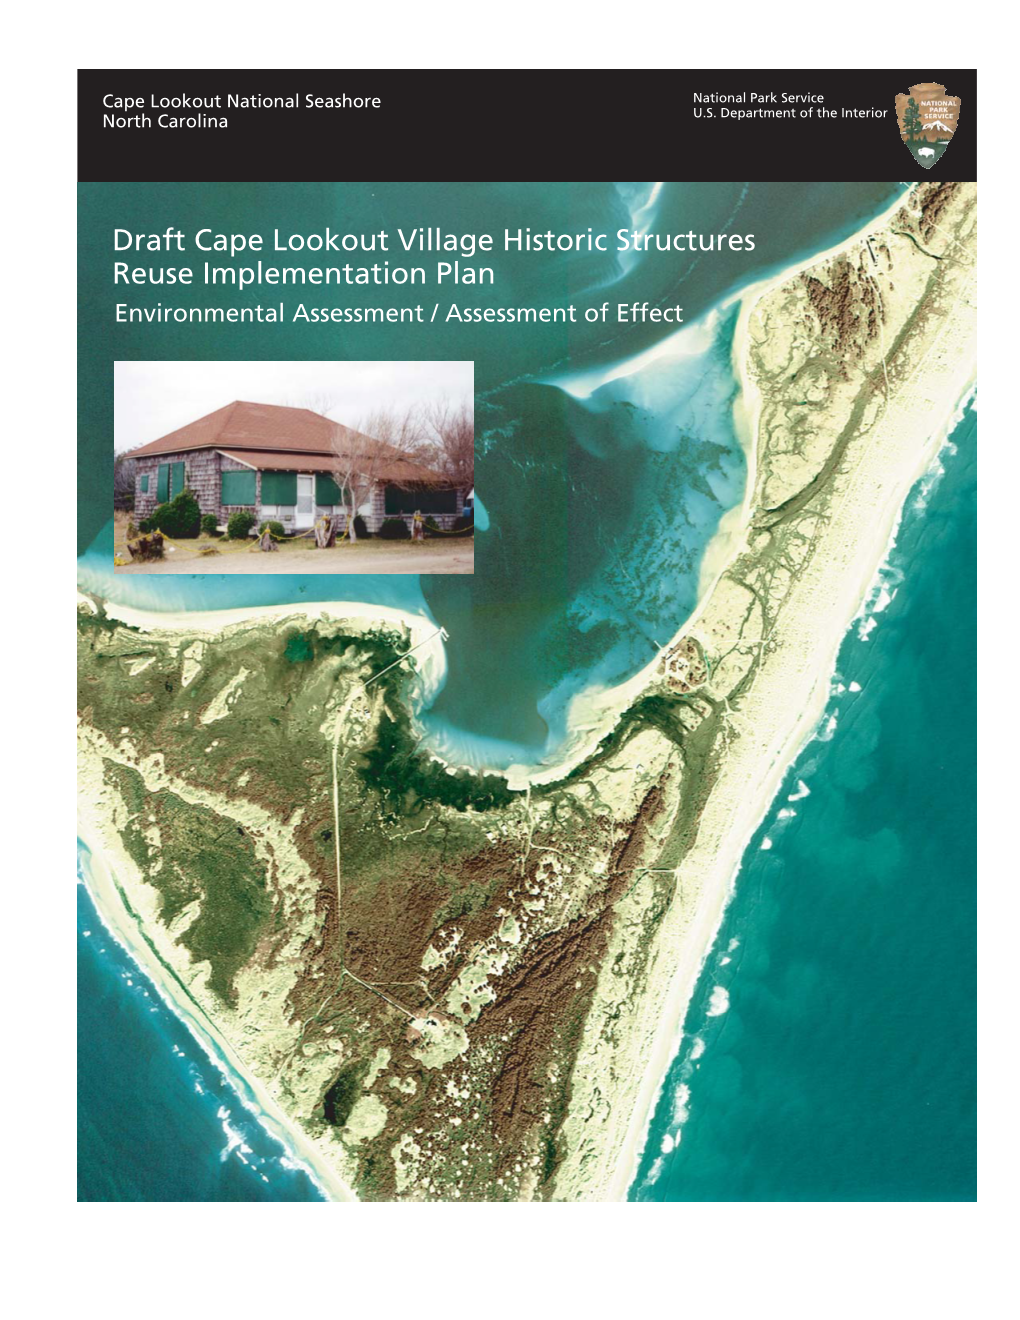 Draft Cape Lookout Village Historic Structures Reuse Implementation Plan Environmental Assessment / Assessment of Effect